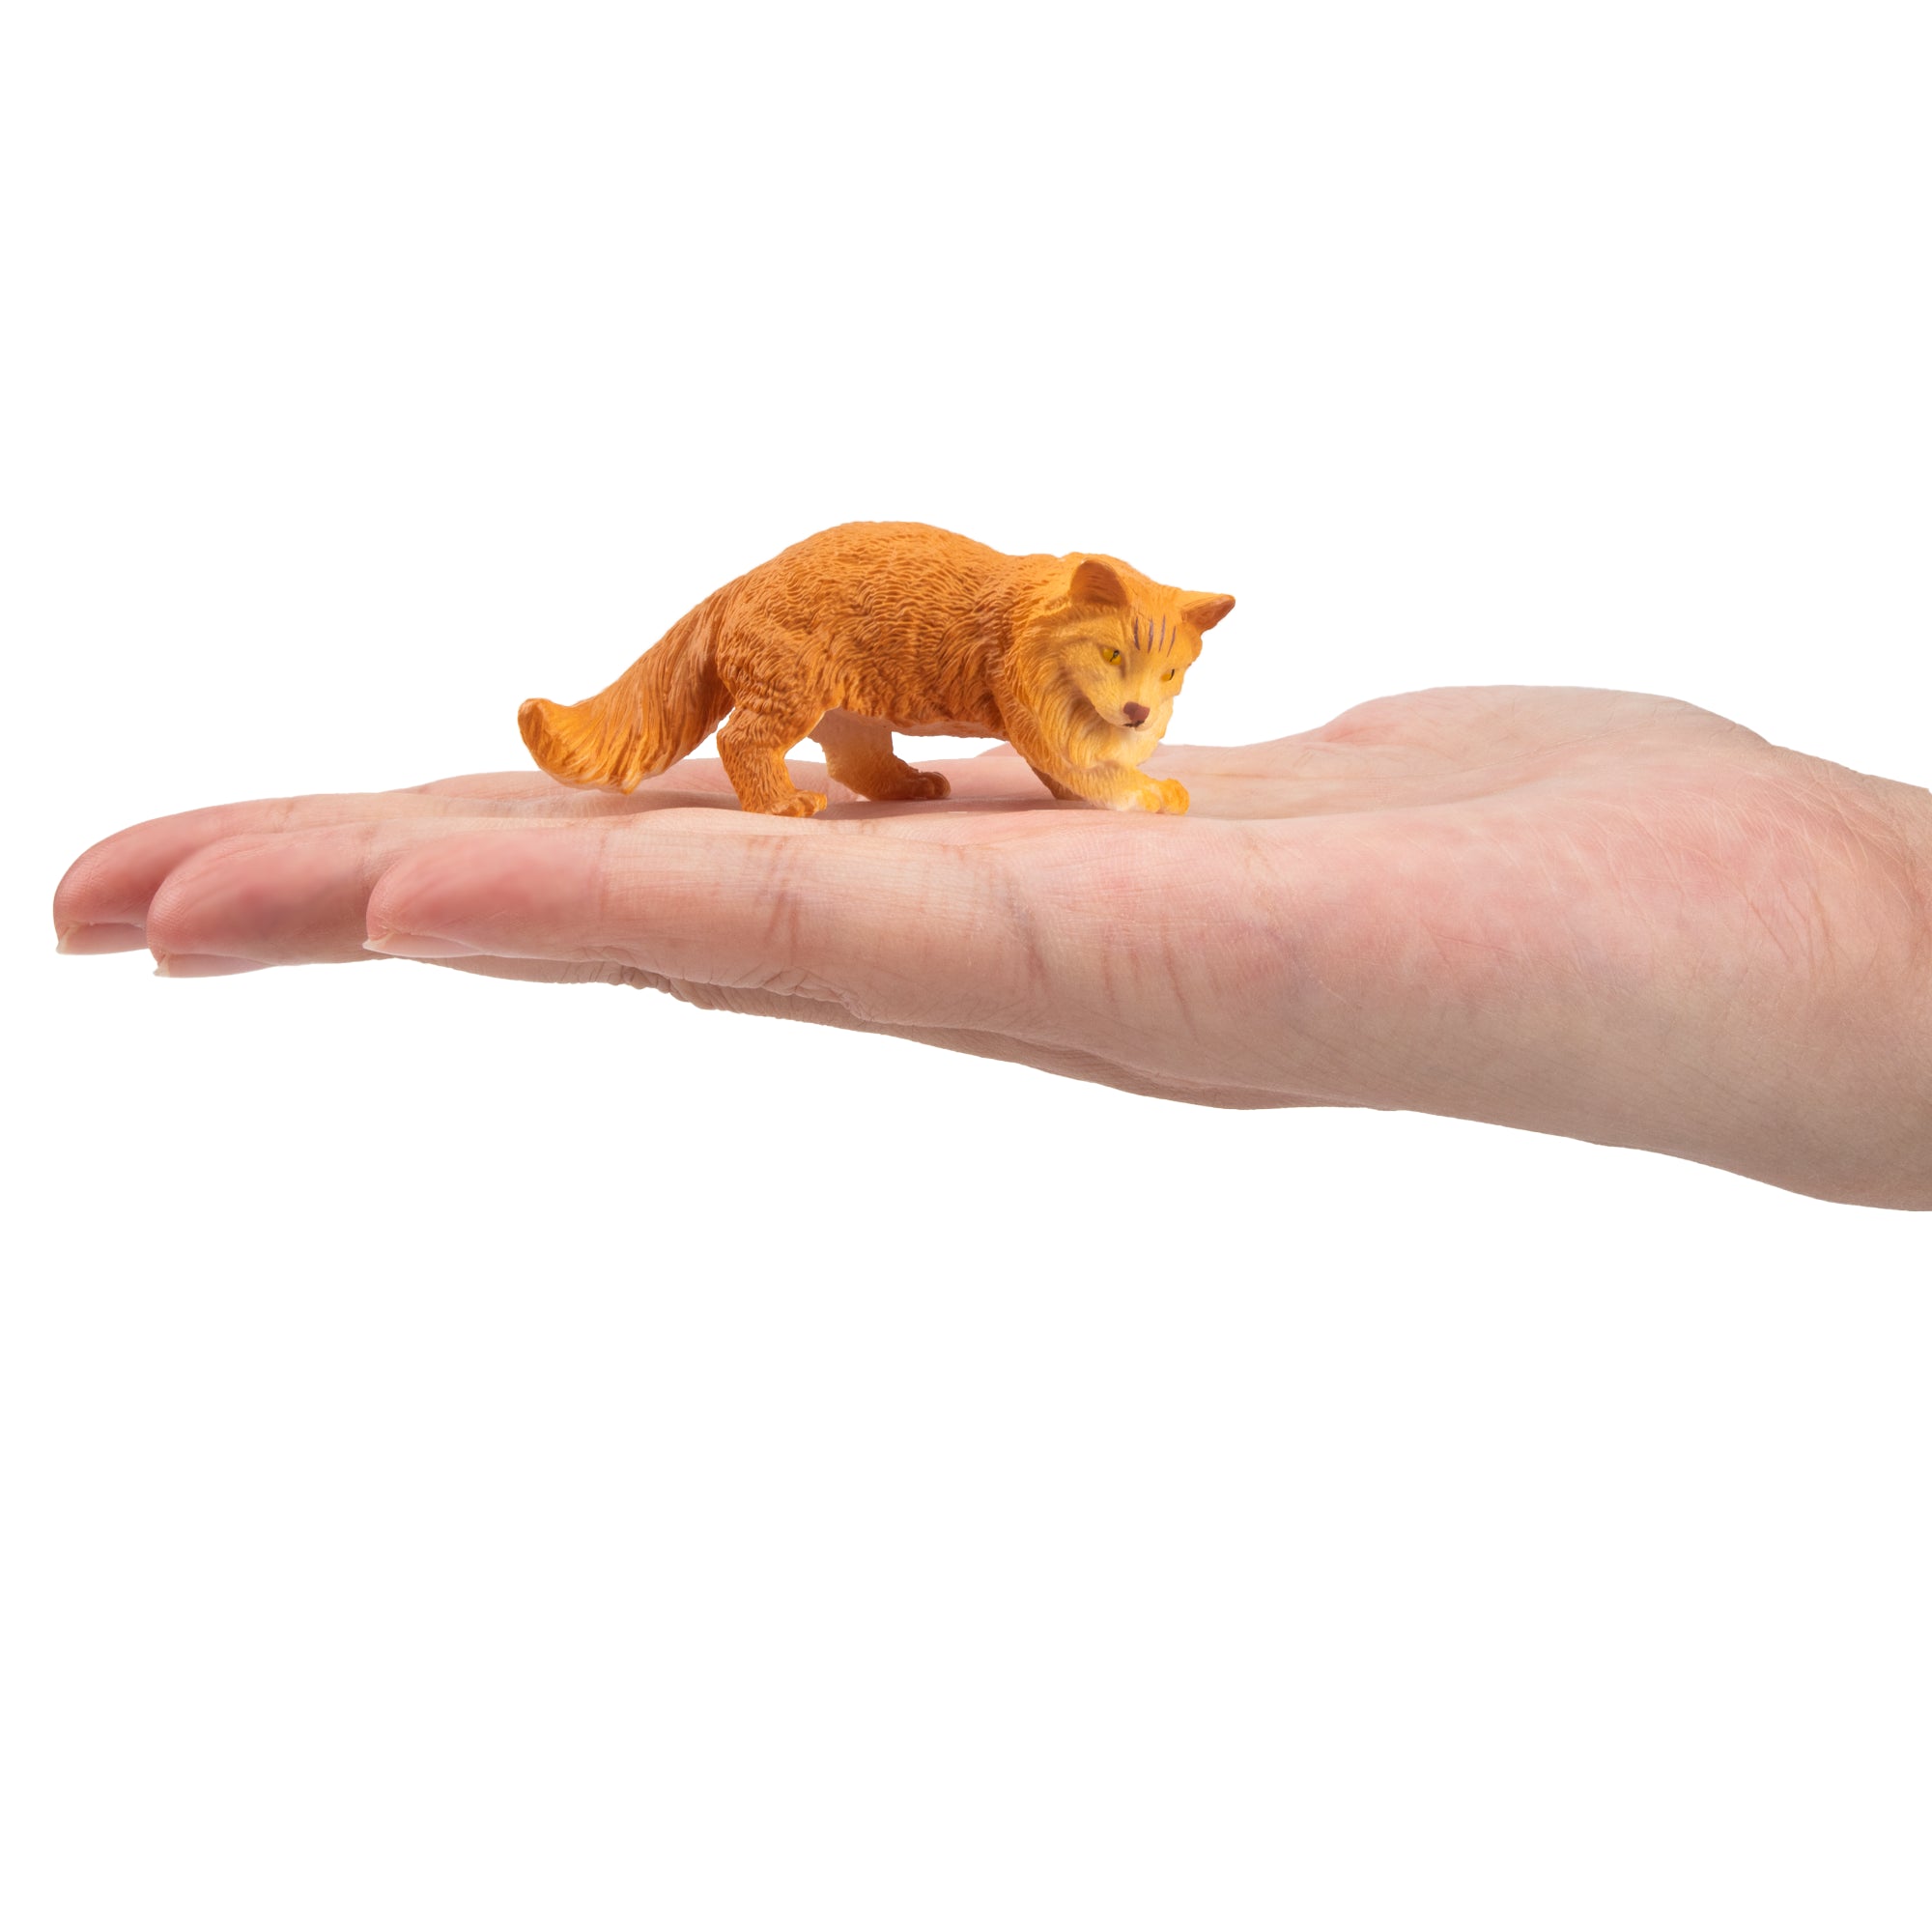 Toymany Orange Norwegian Forest Cat Figurine Toy-on hand